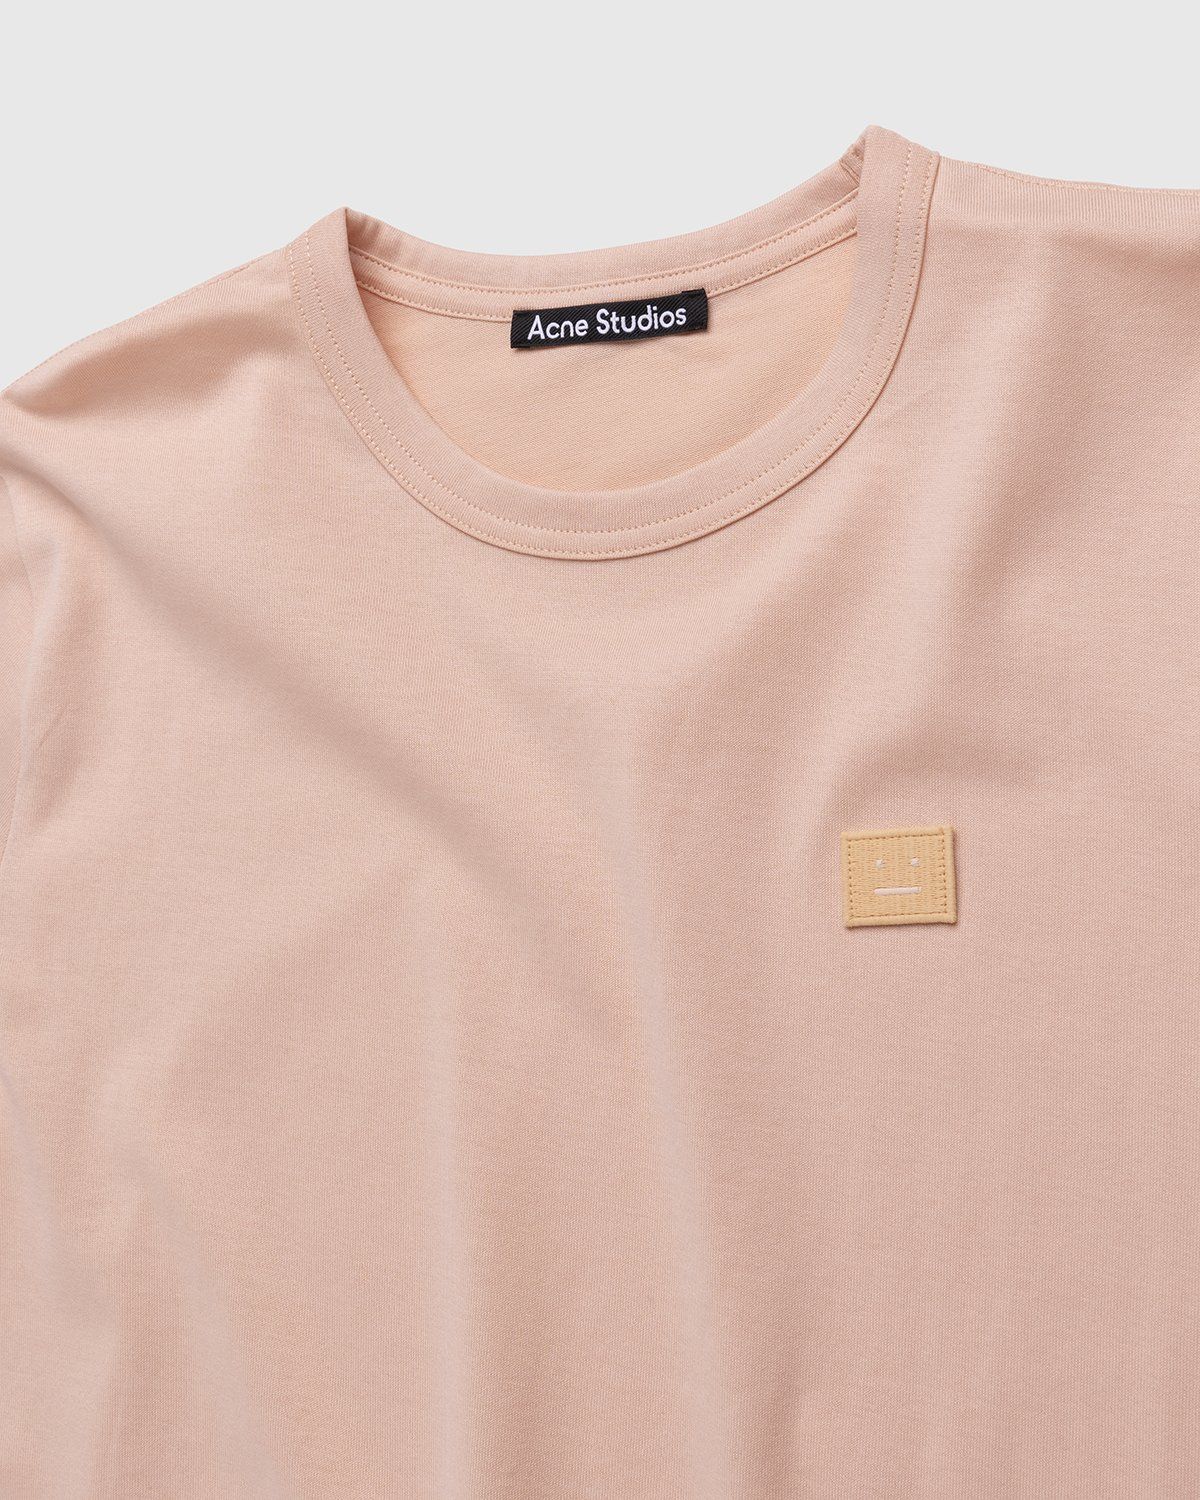 Acne Studios – Slim Fit T-Shirt Powder Pink - T-Shirts - Pink - Image 4